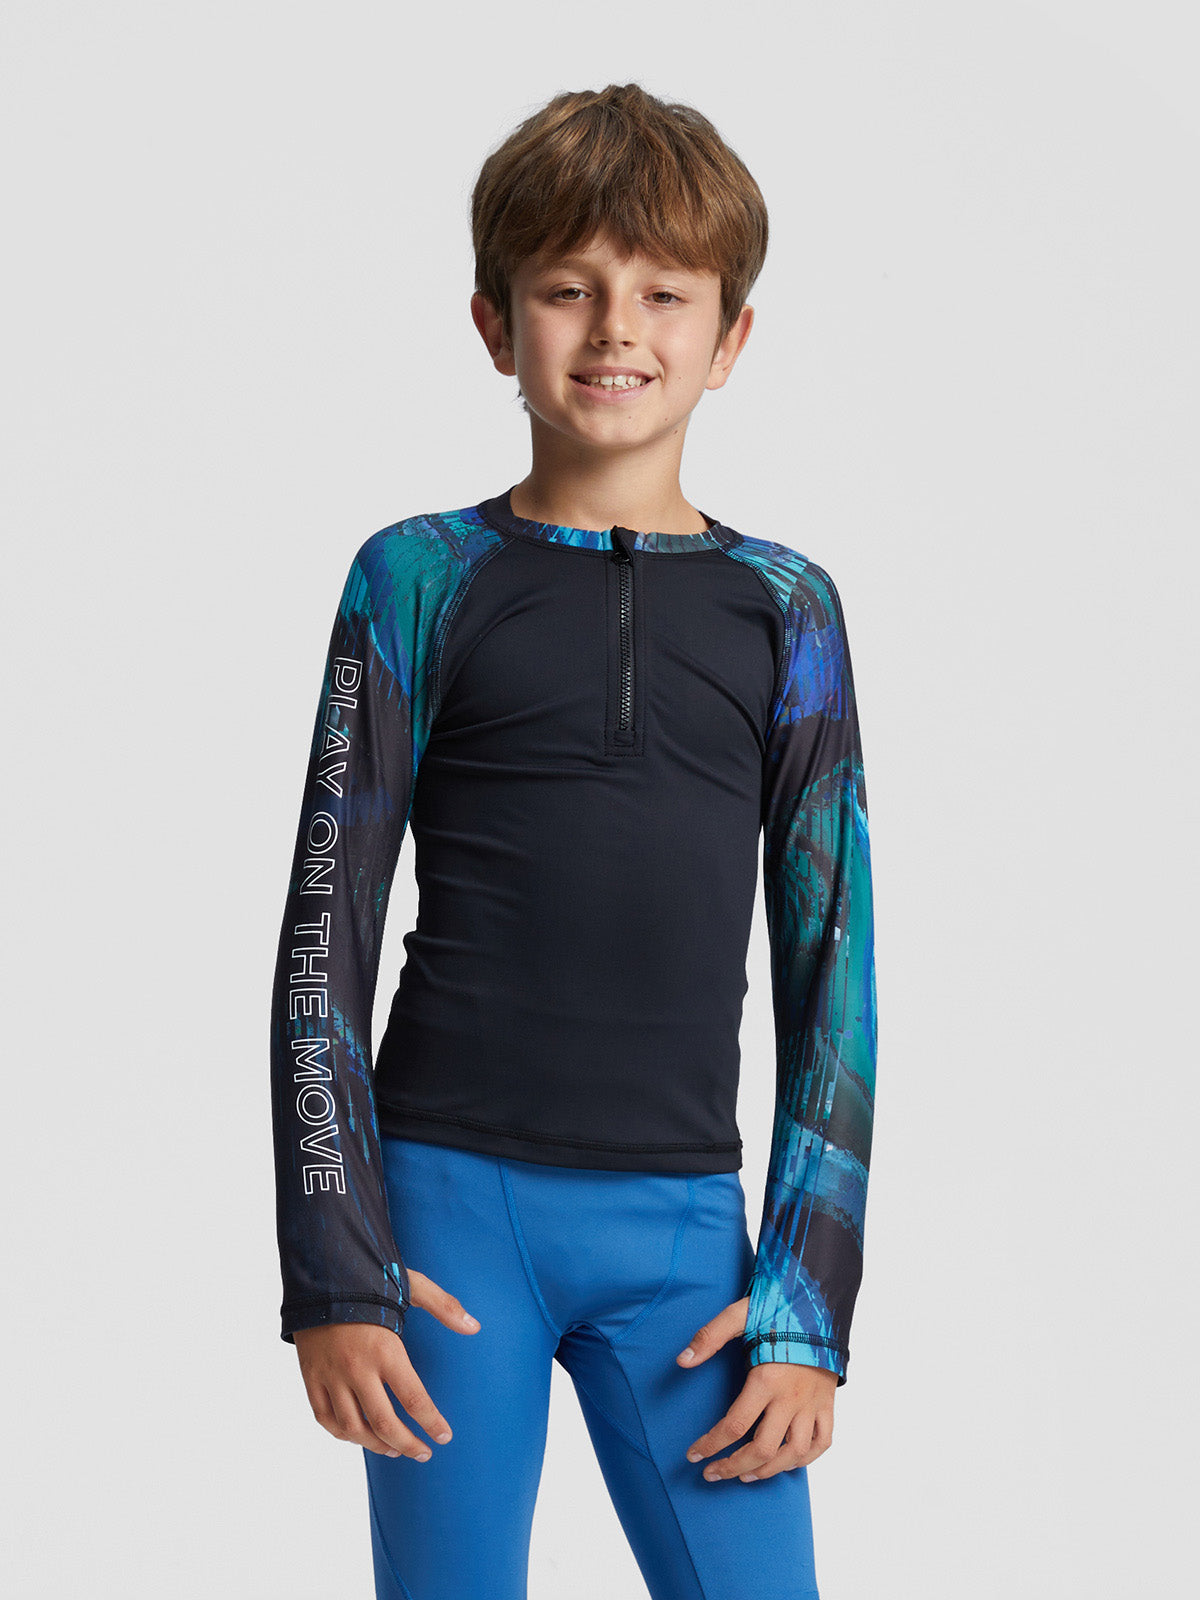 moodytiger Kids Fearless Surfing Suit UV Protection One-piece Swimwear